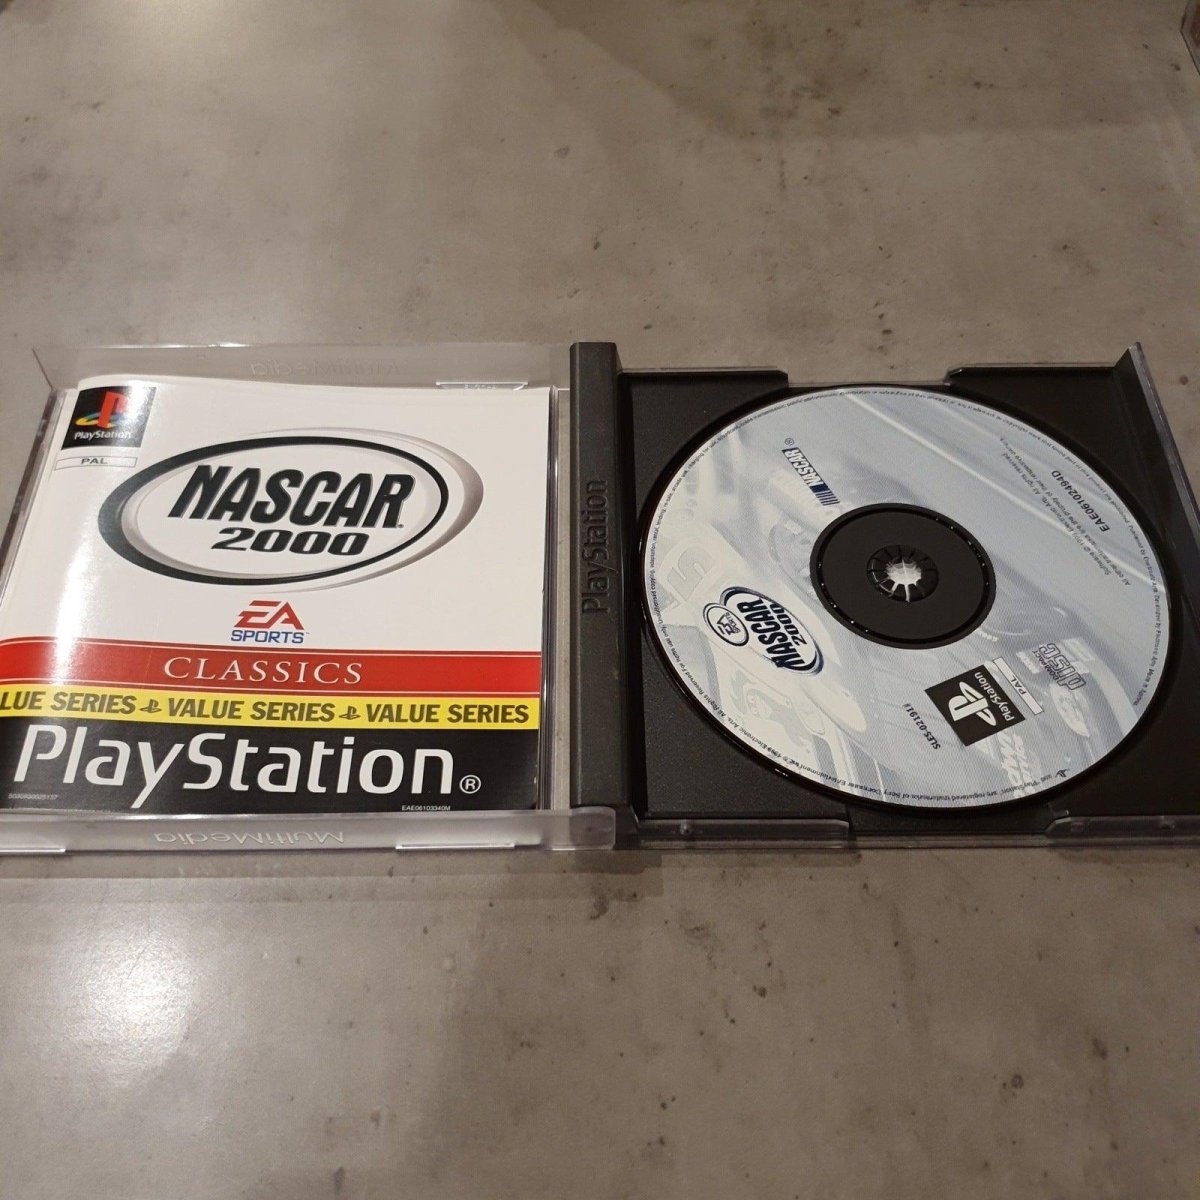 Nascar 2000 classics game Sony Playstation 1 (PS1) - Veilingcoach.be